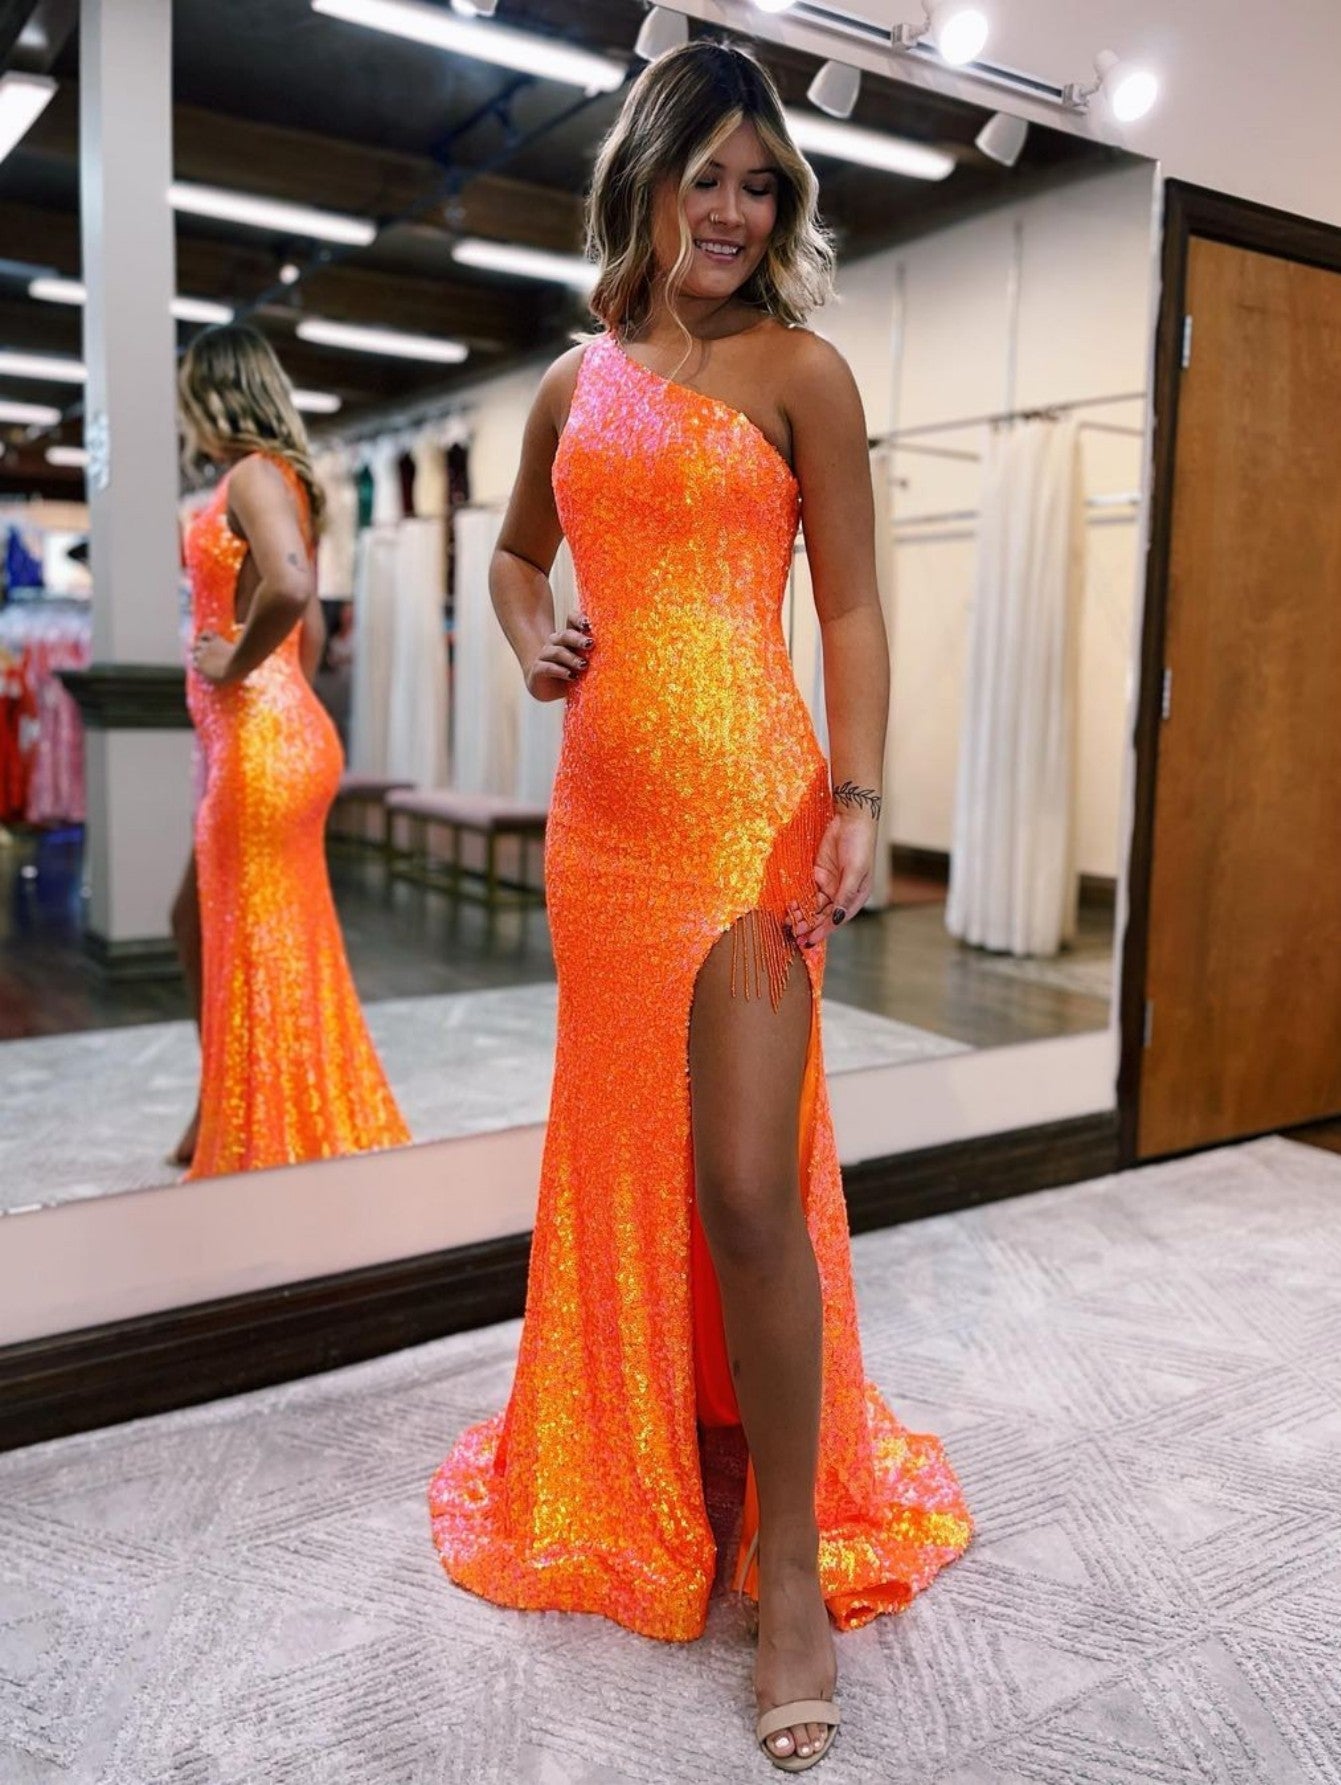 orange prom dresses